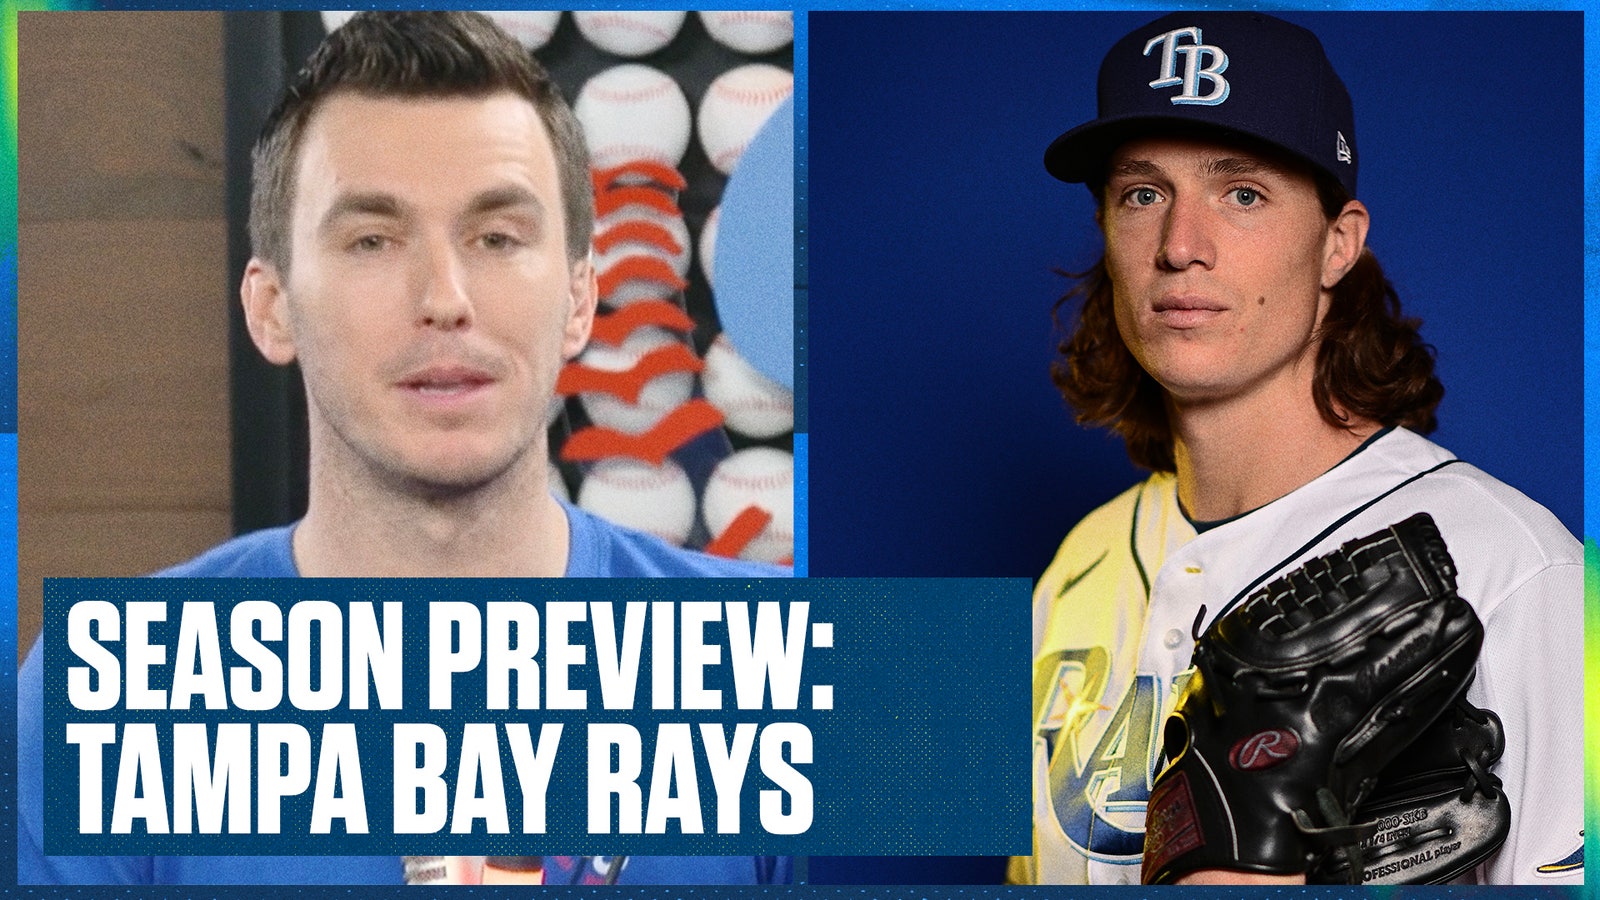 Tampa Bay Rays season preview